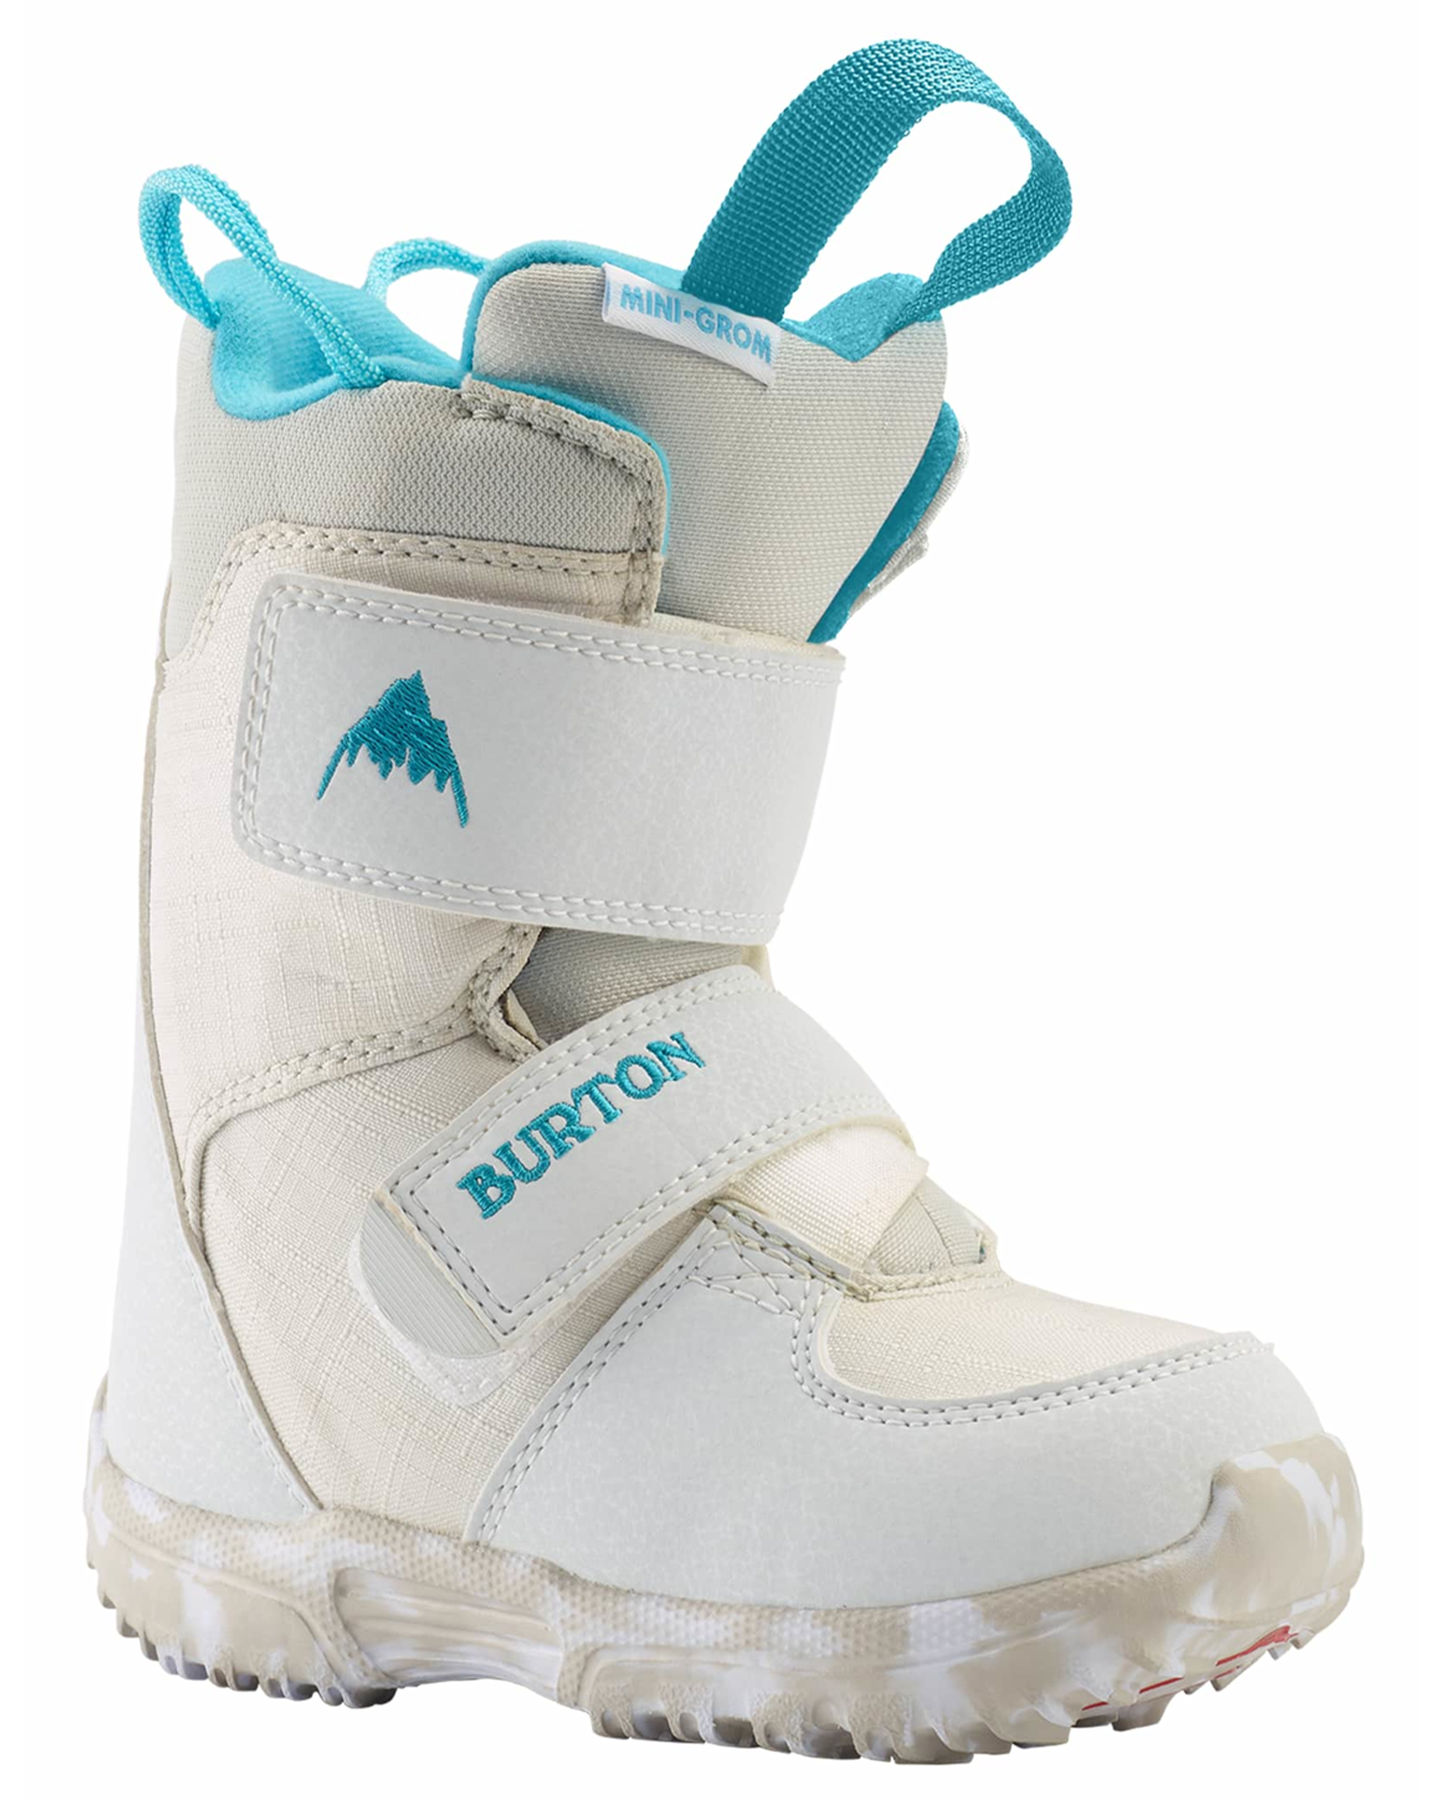 Burton Toddlers' Mini Grom Snowboard Boots - White Snowboard Boots - Kids - SnowSkiersWarehouse